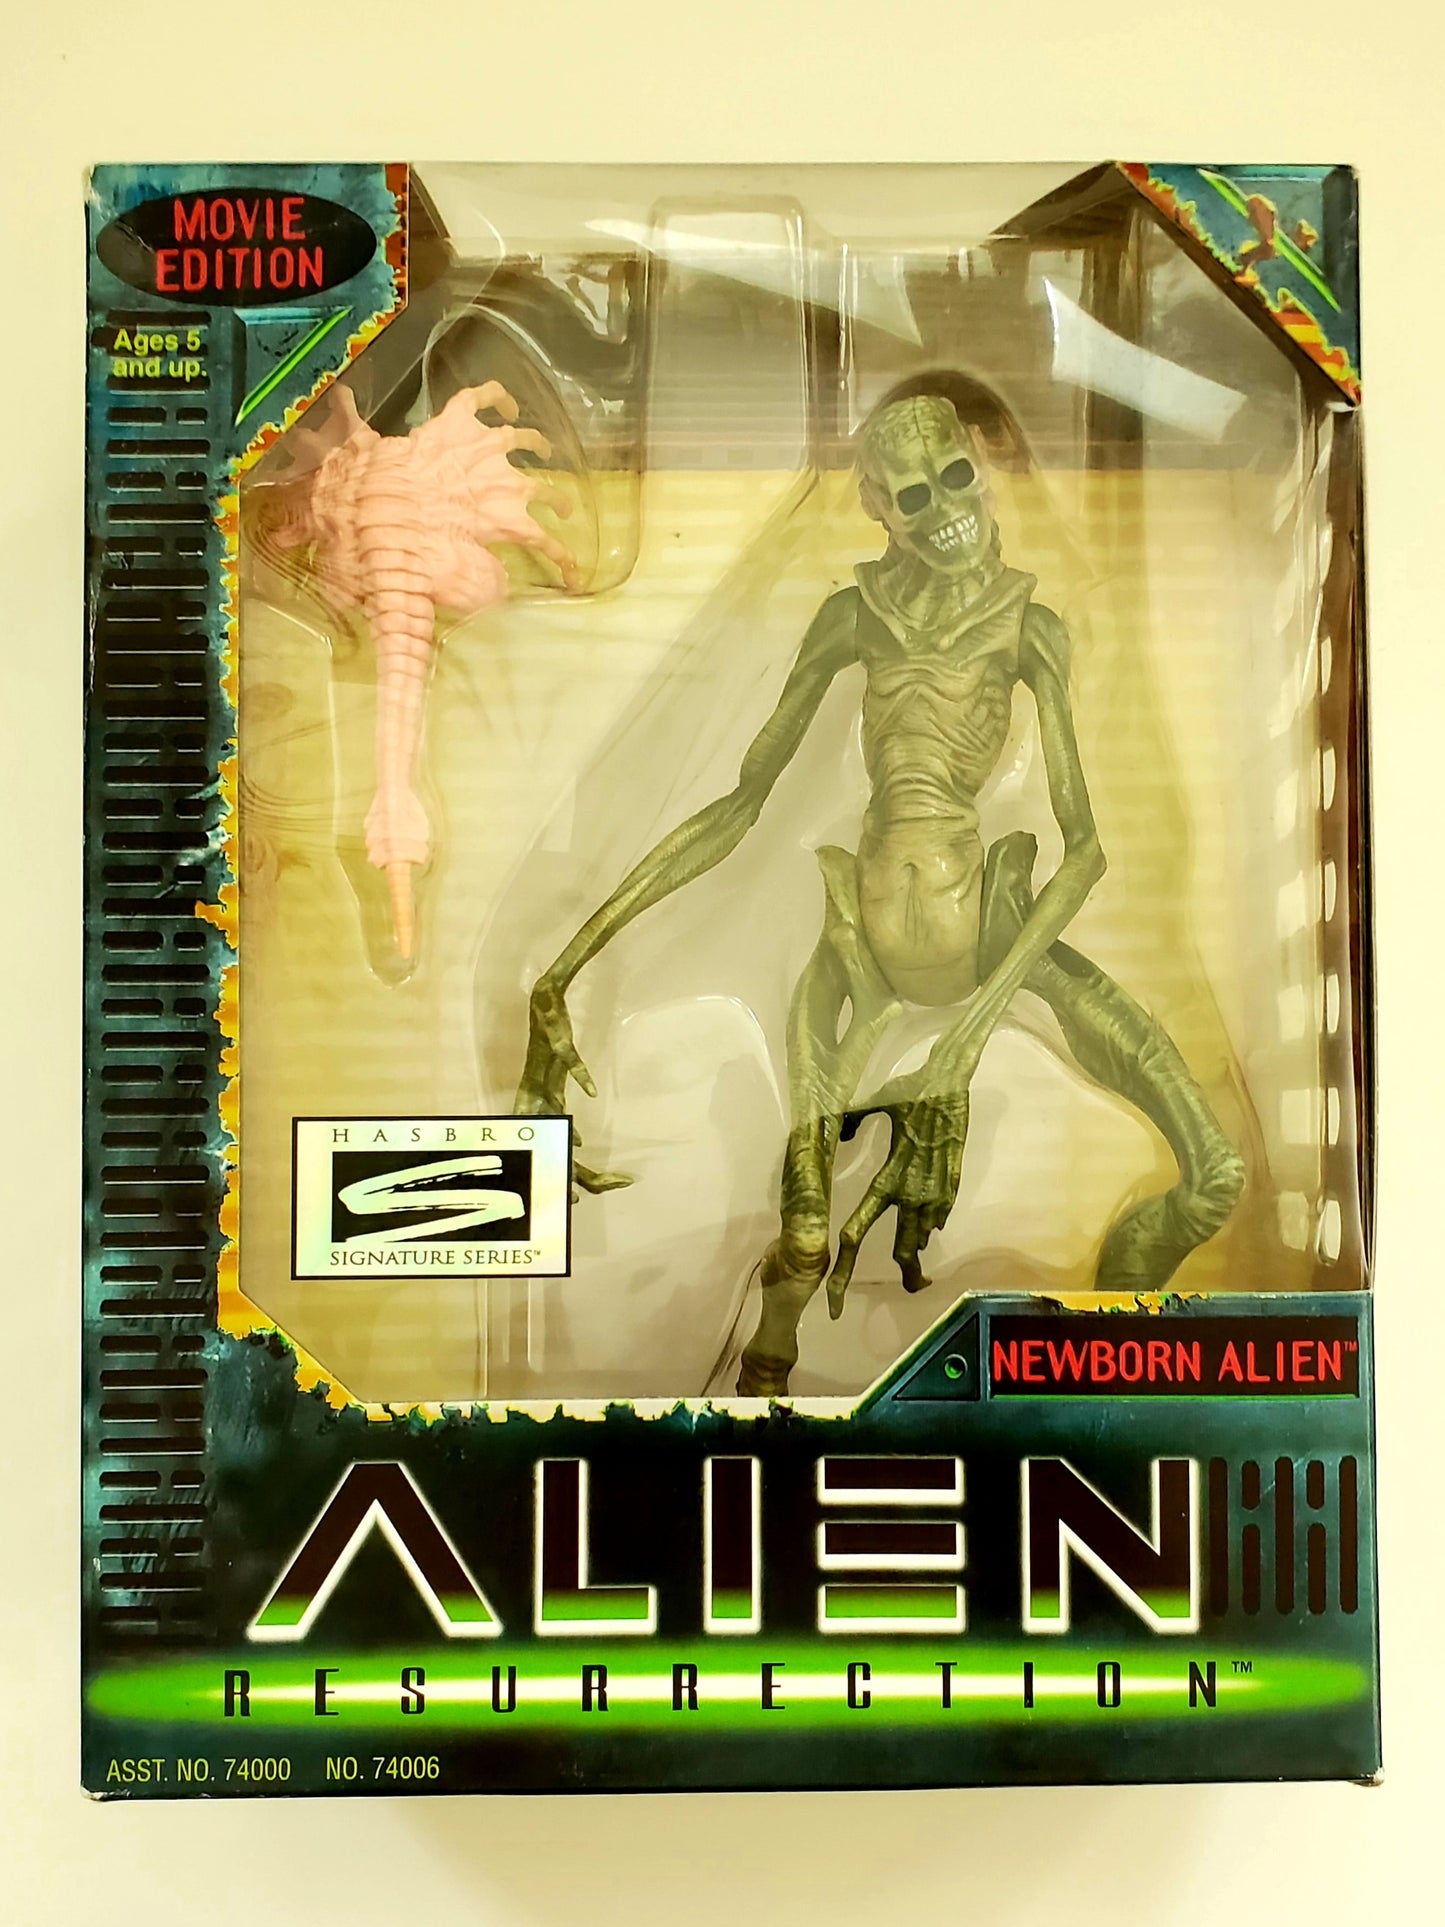 Movie Edition Newborn Alien from Alien Resurrection